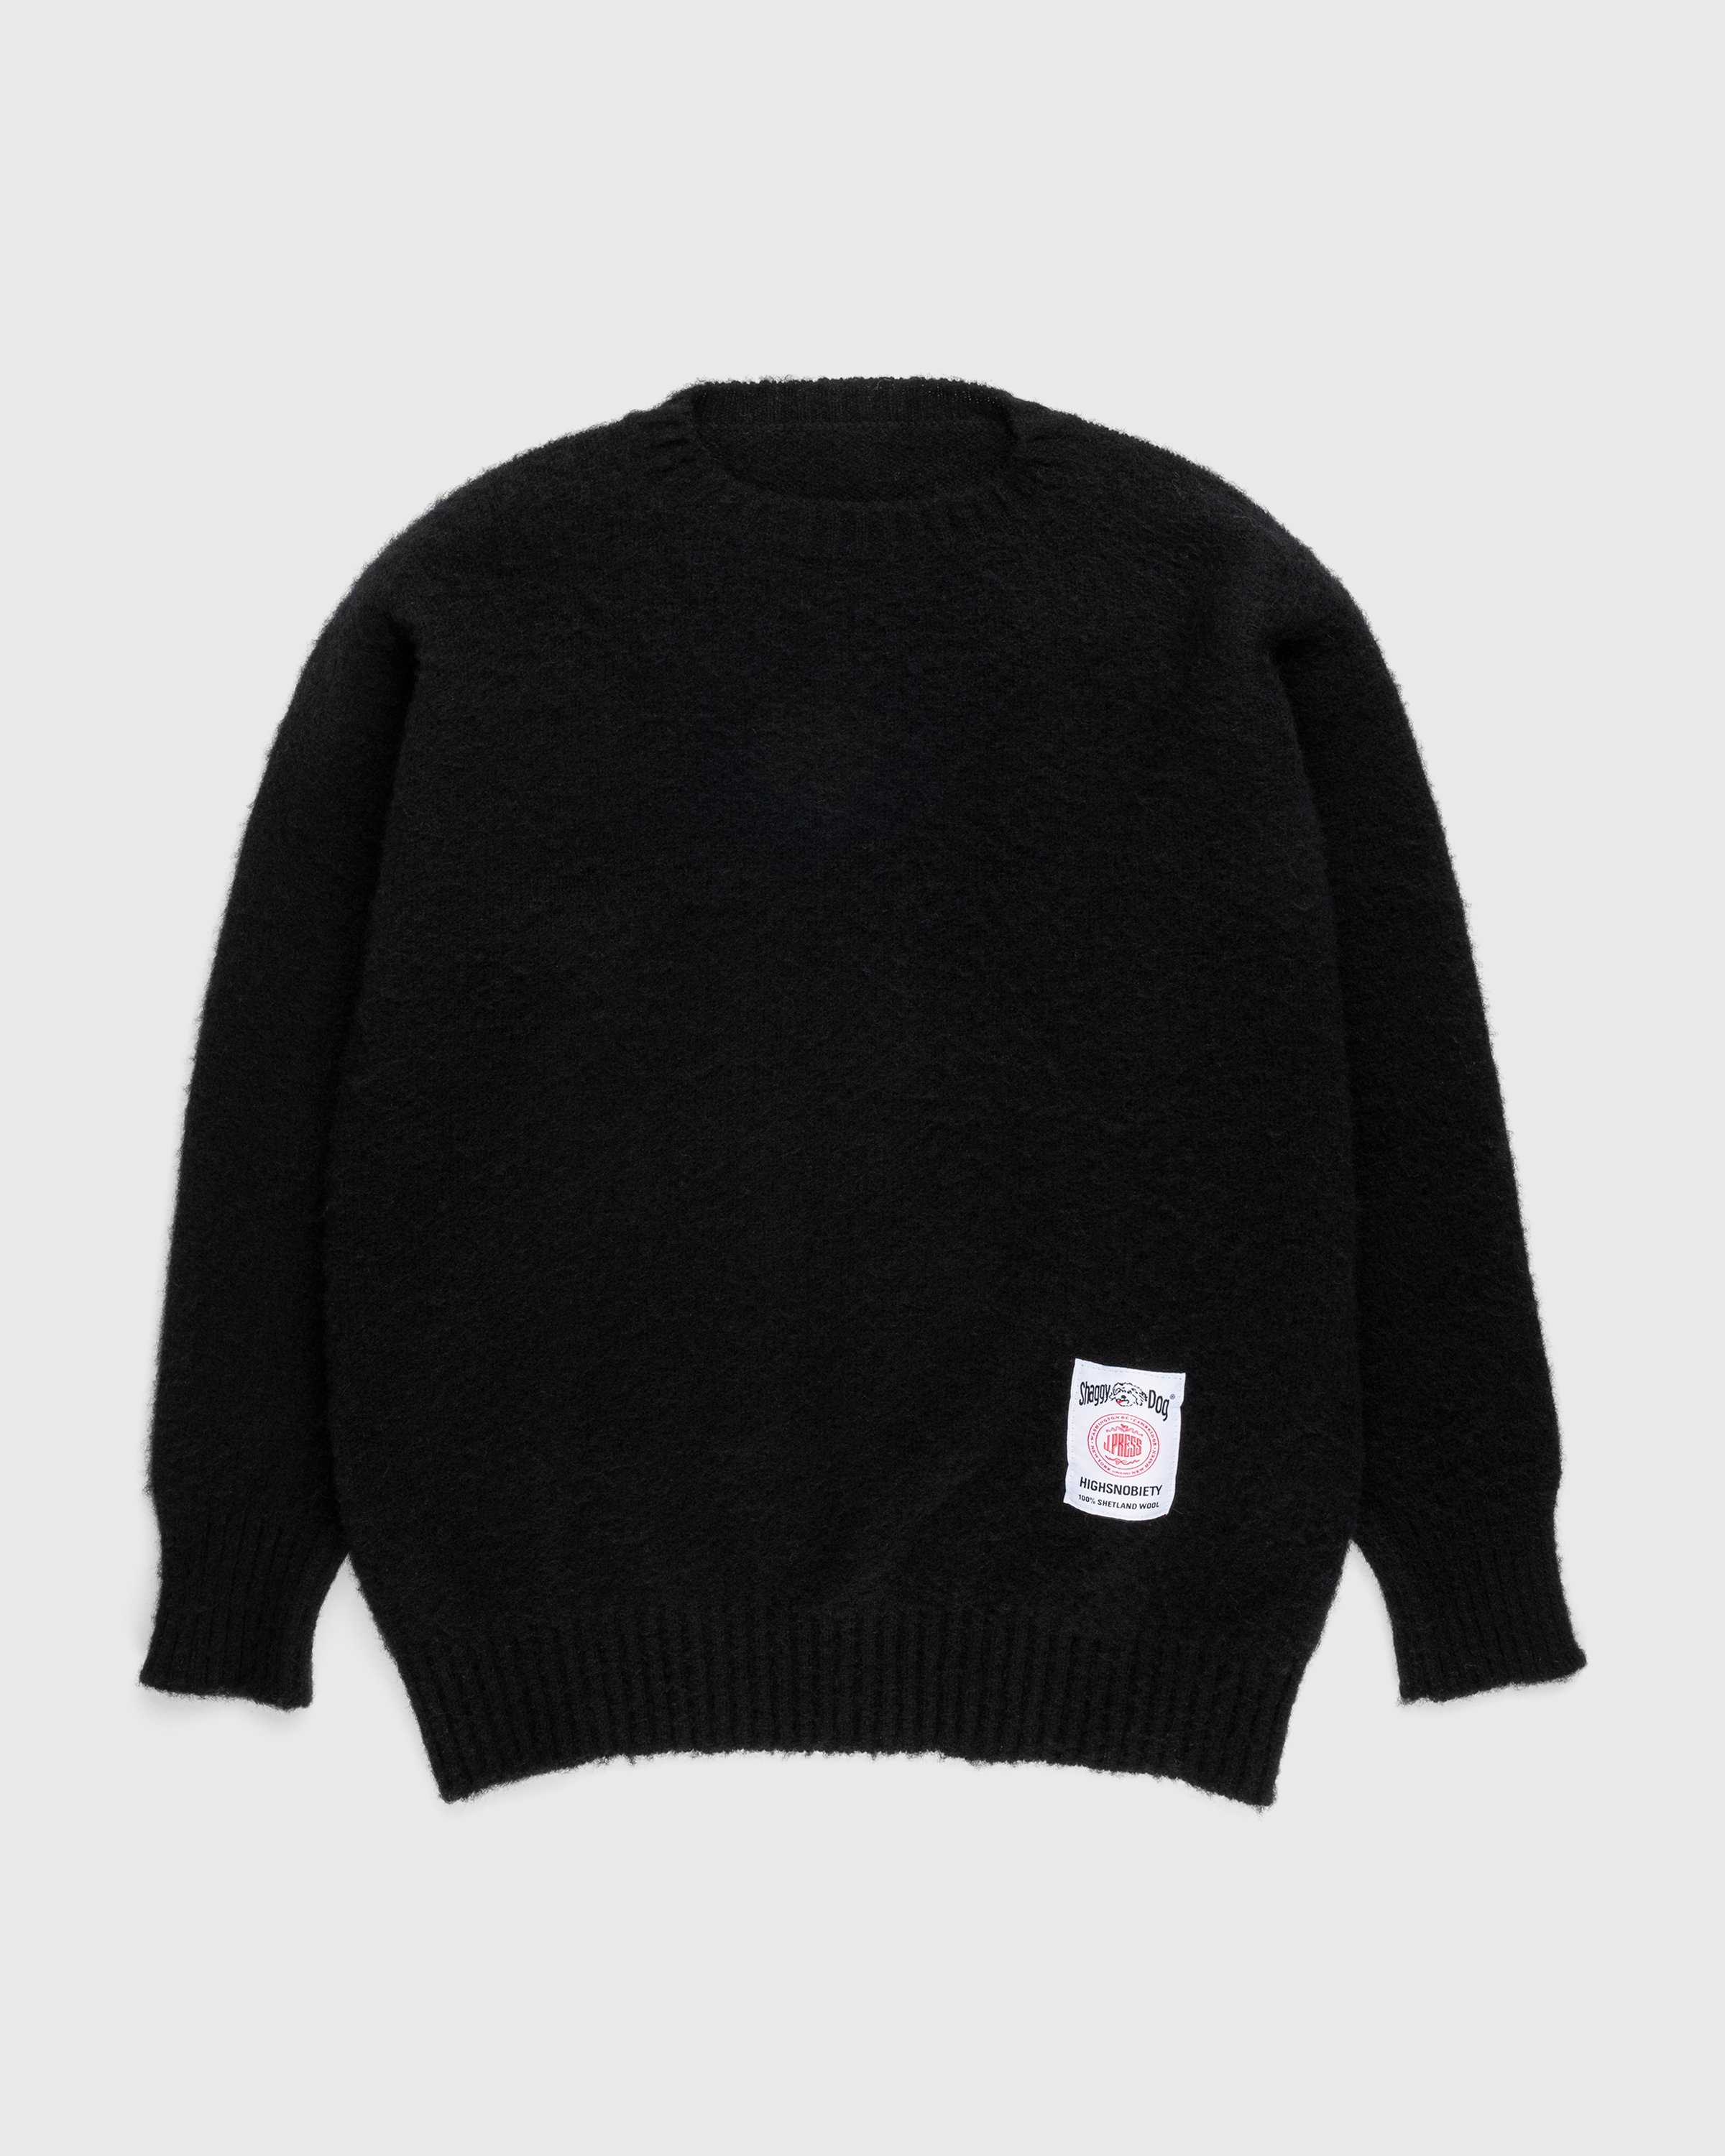 J. Press x Highsnobiety - Shaggy Dog Solid Sweater Black - Clothing - Black - Image 1